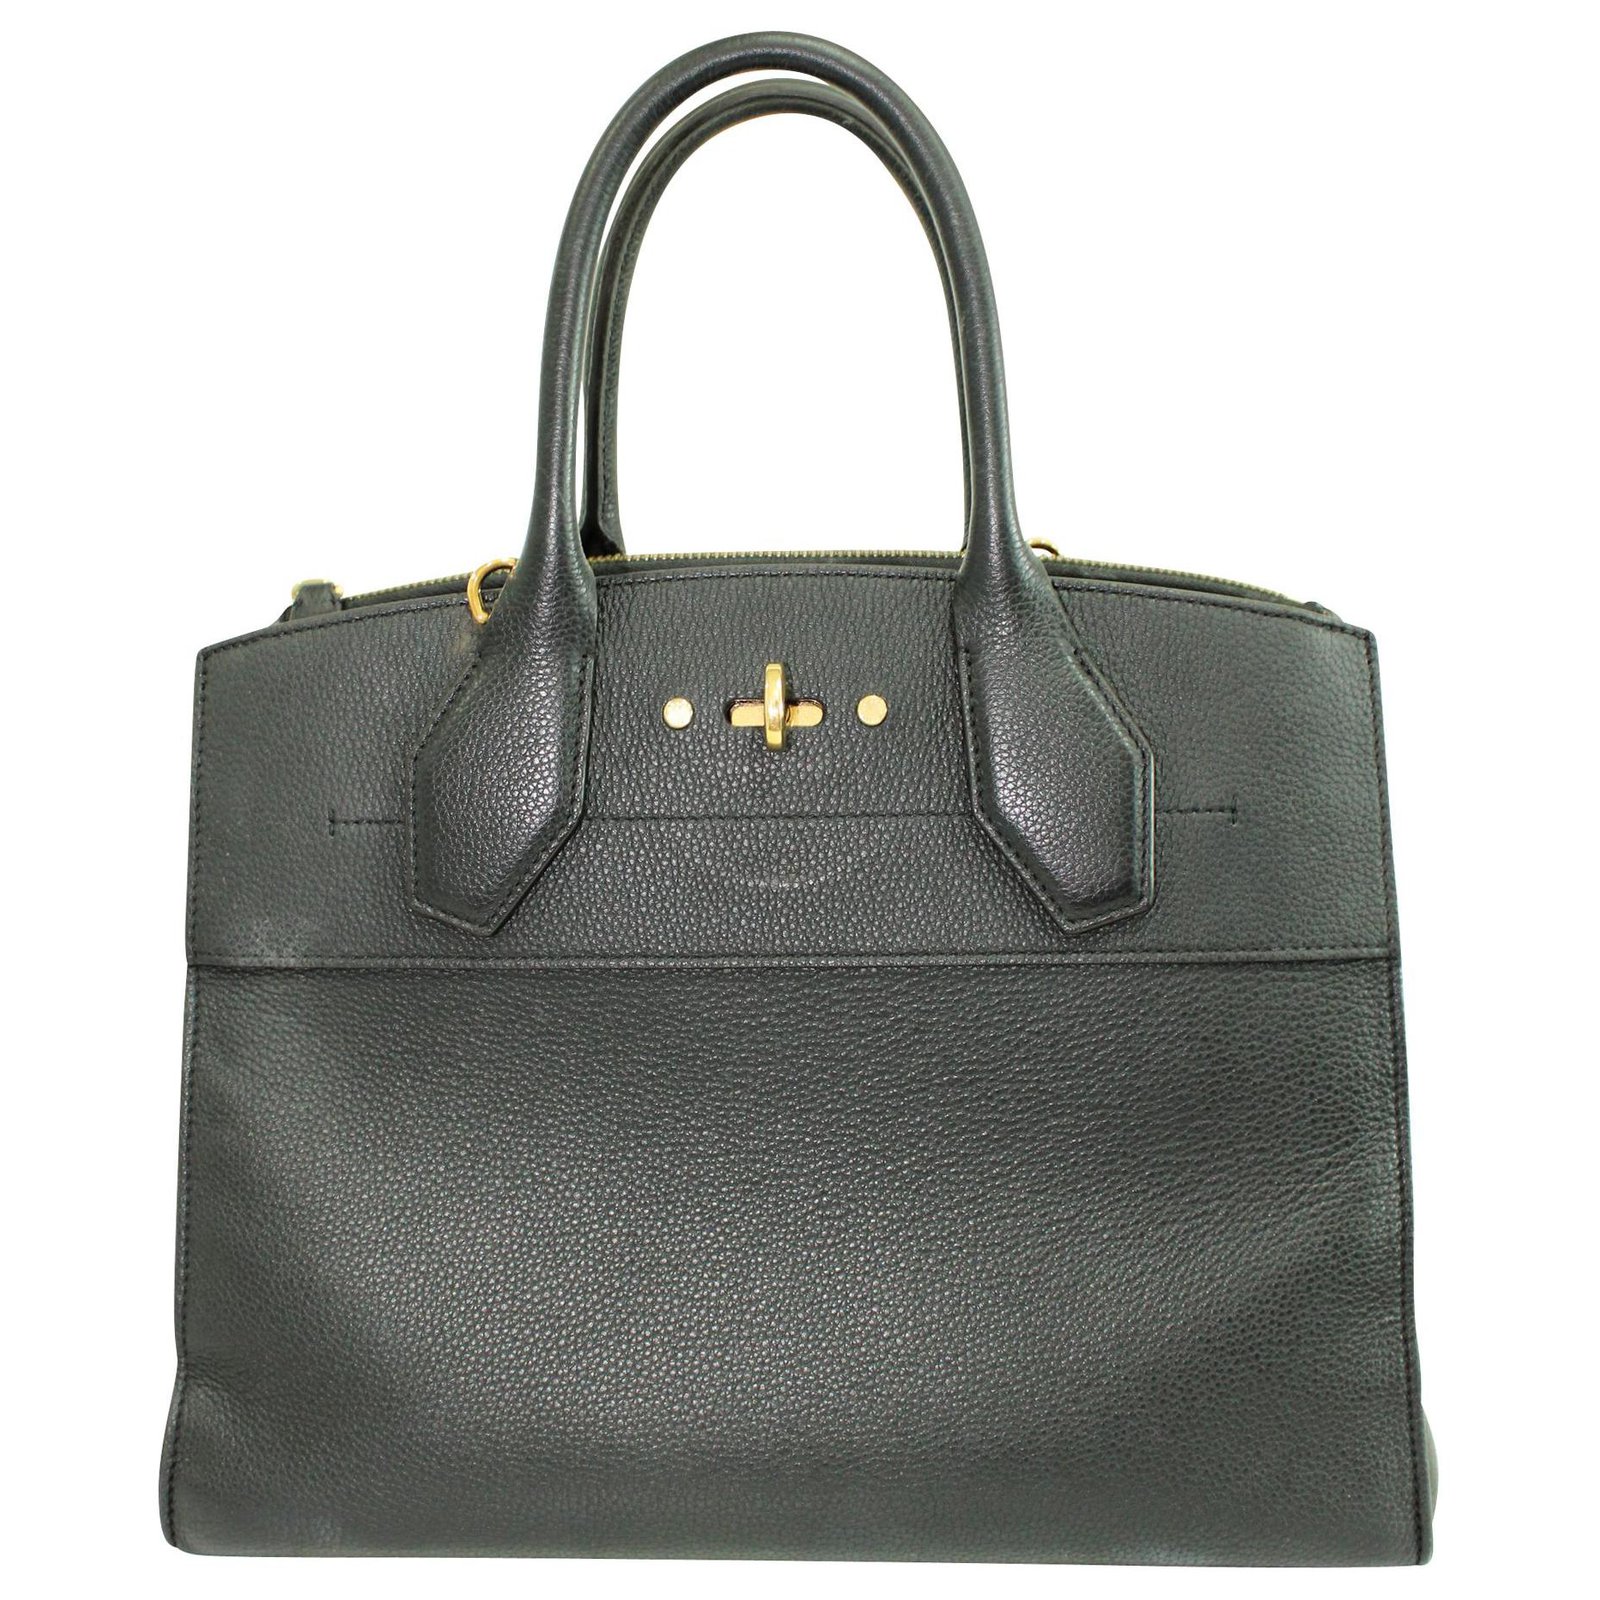 Louis Vuitton Black Leather Cruise 2016 City Steamer MM Handbag